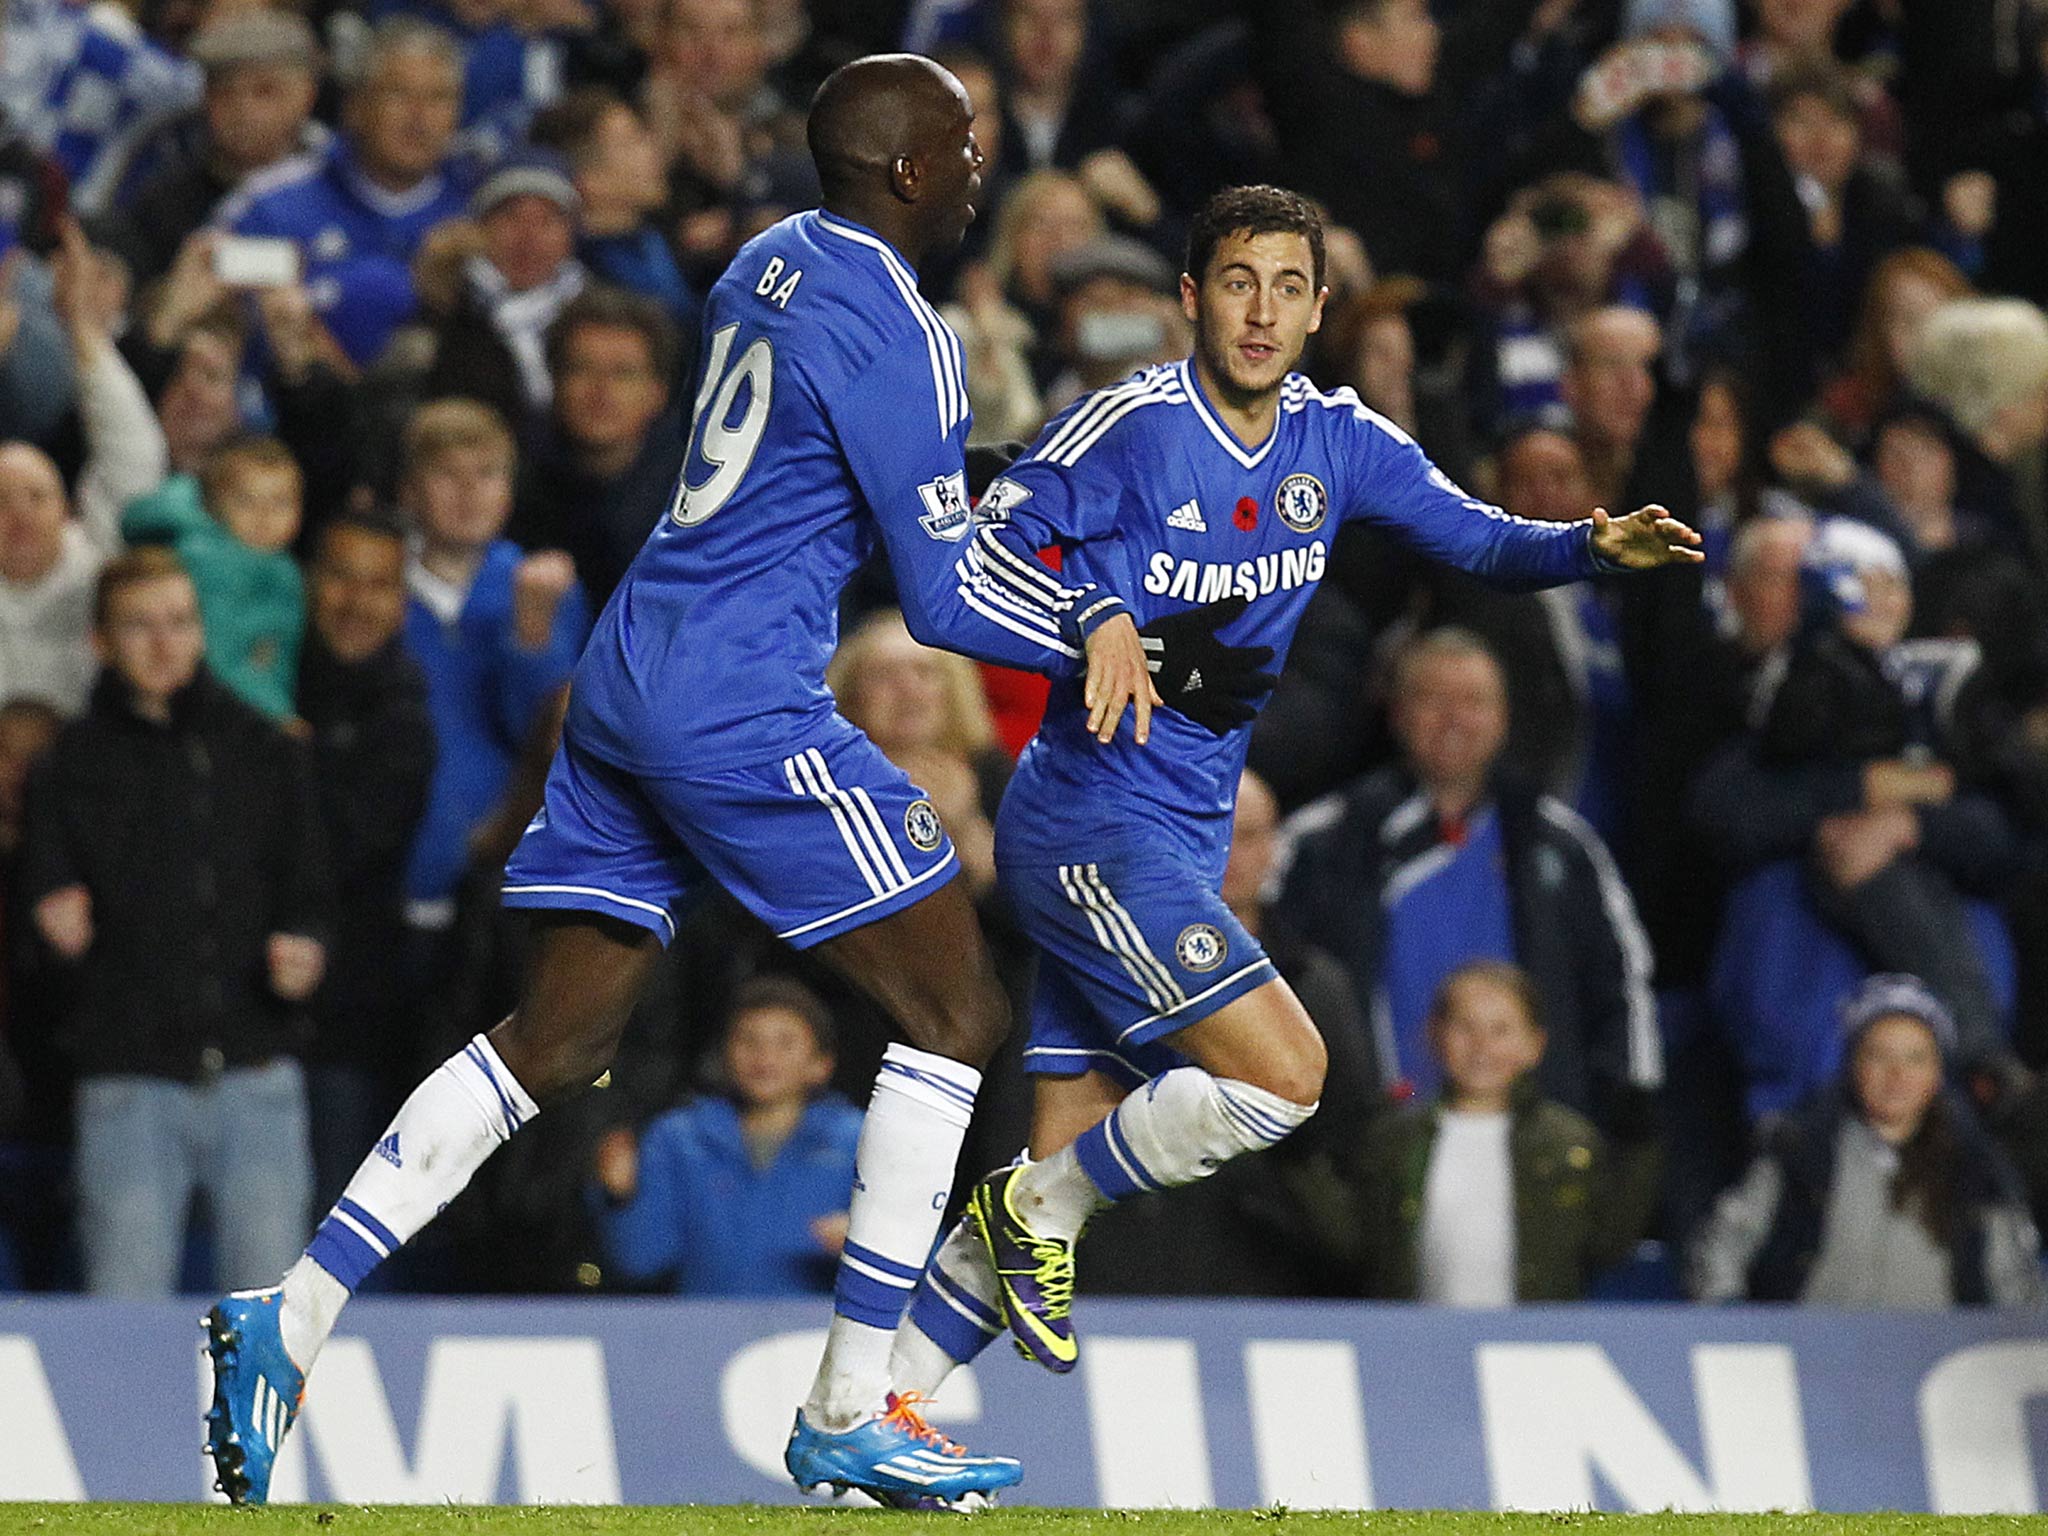 Eden Hazard of Chelsea celebrates with team mate Demba Ba after scoring the equaliser